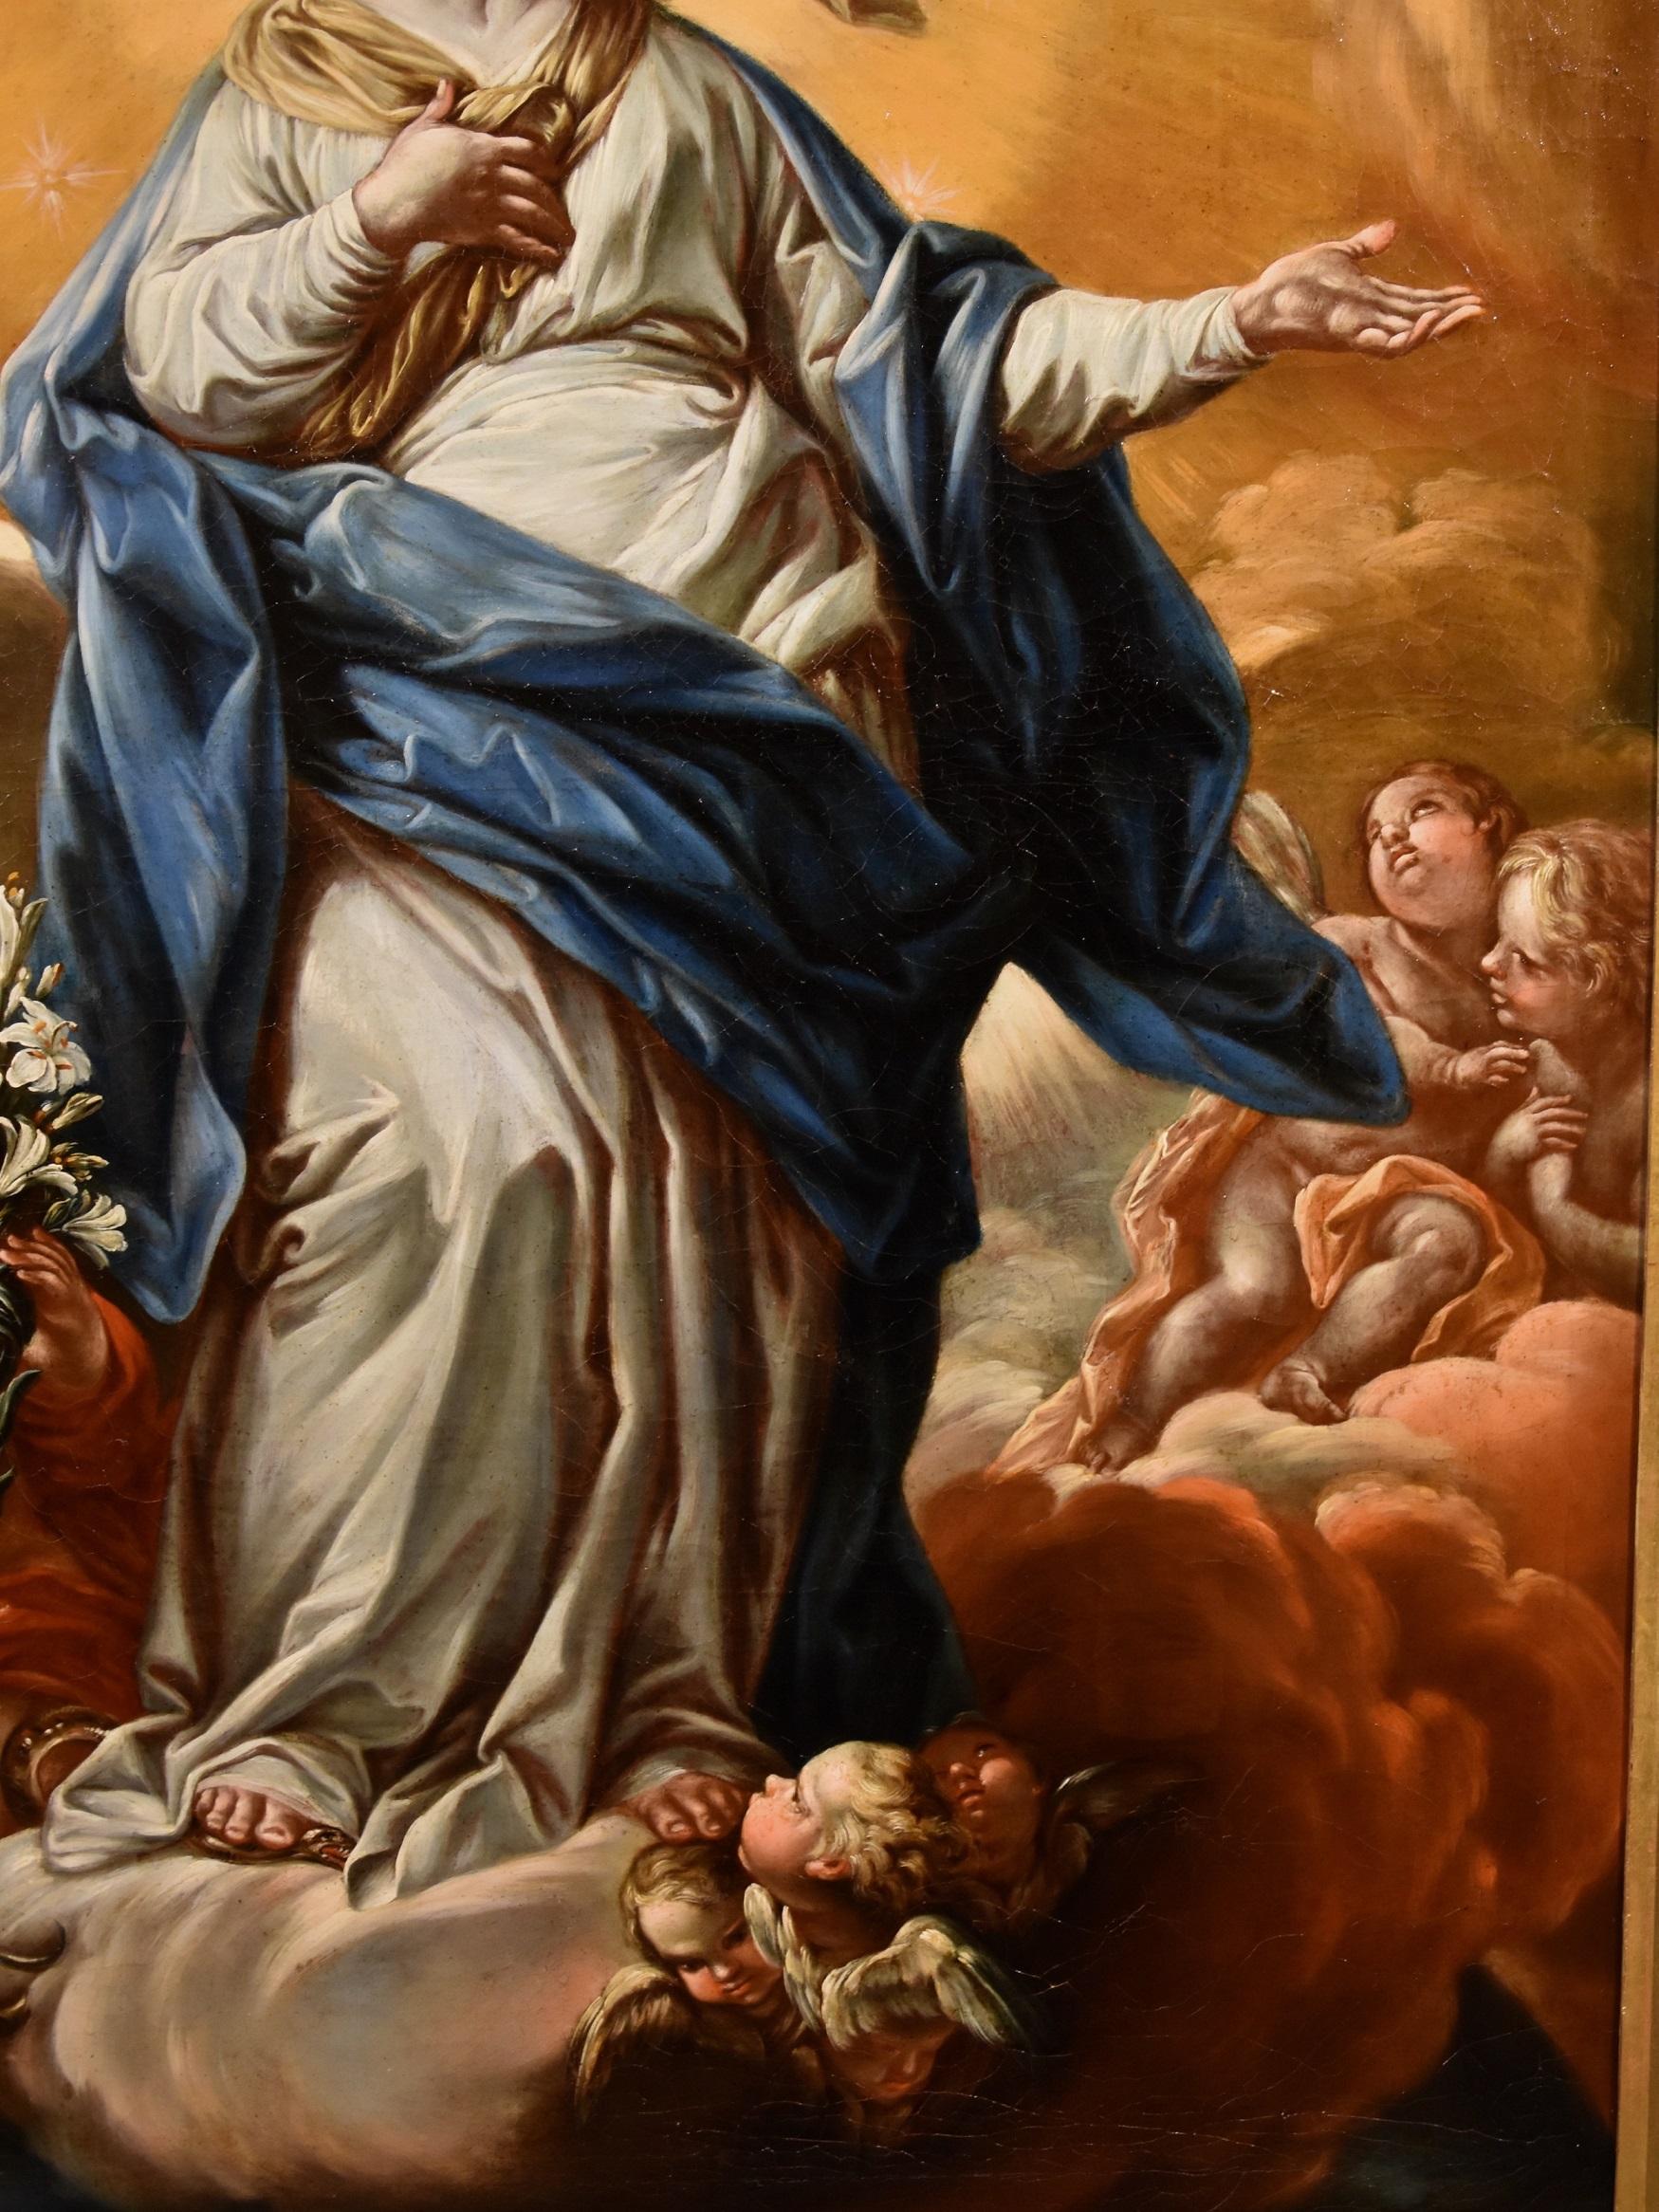 Immaculate Virgin Madonna Brandi Paint Oil on canvas Old master 17th Century Art 1